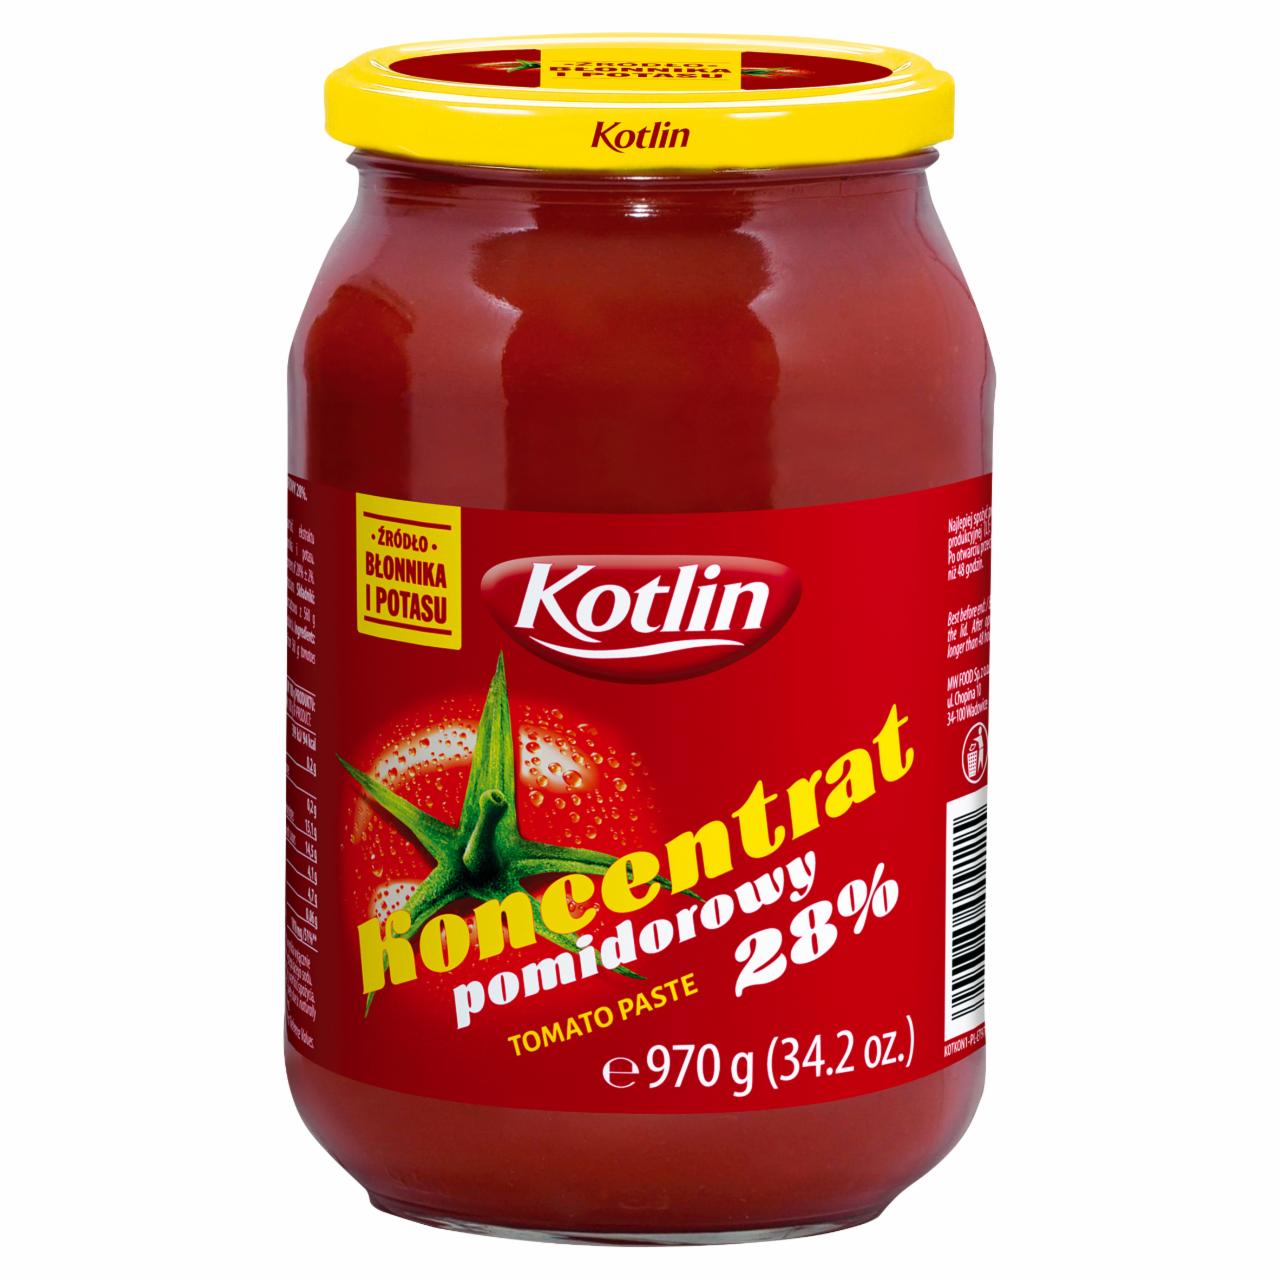 Zdjęcia - Kotlin Koncentrat pomidorowy 28% 970 g